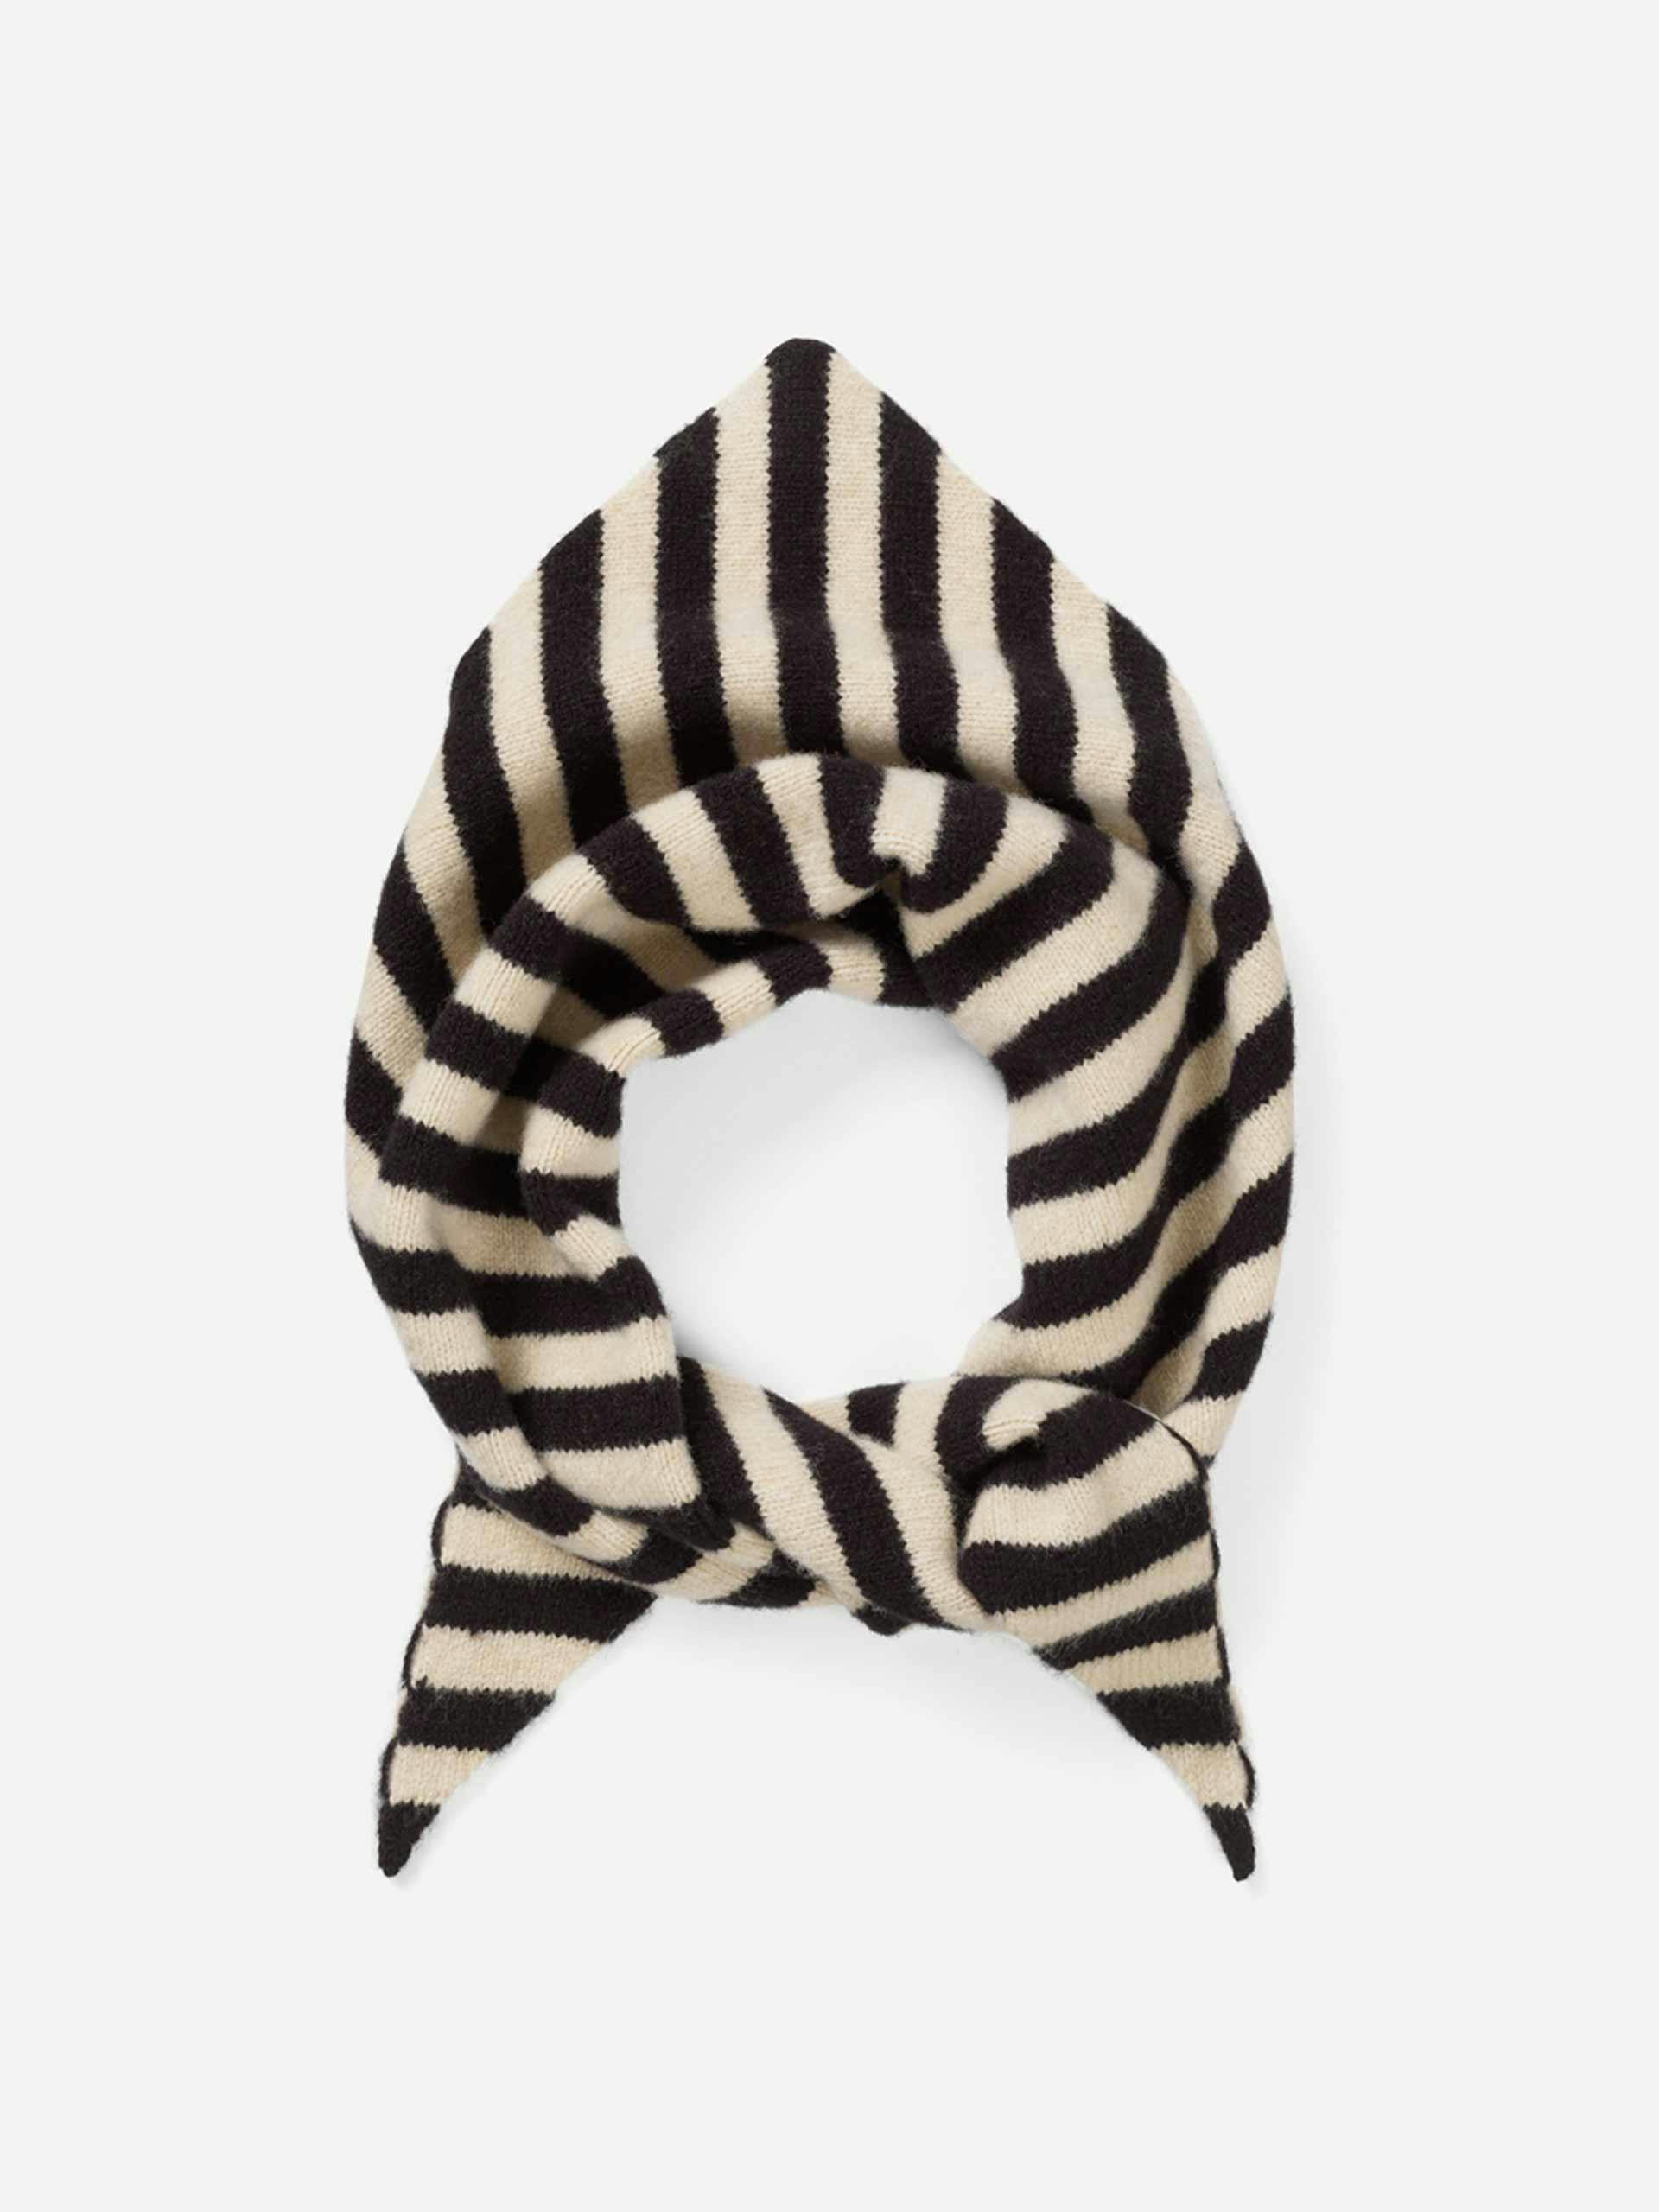 Black and oatmeal striped neckerchief